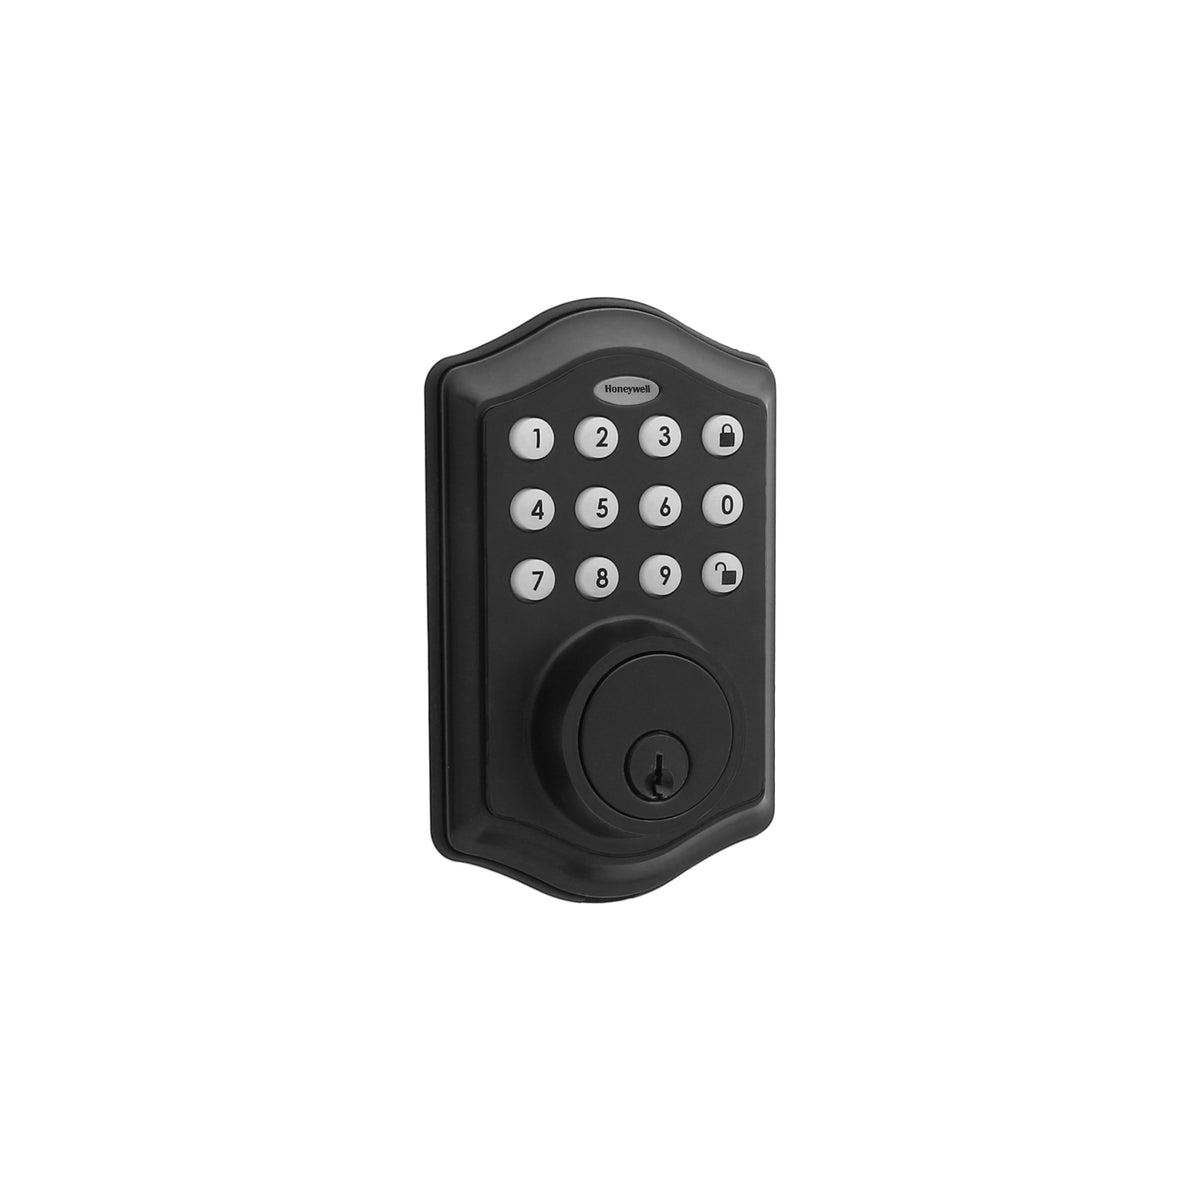 Honeywell 8712509 Electronic Deadbolt Door Lock with Keypad in Matte Black Front